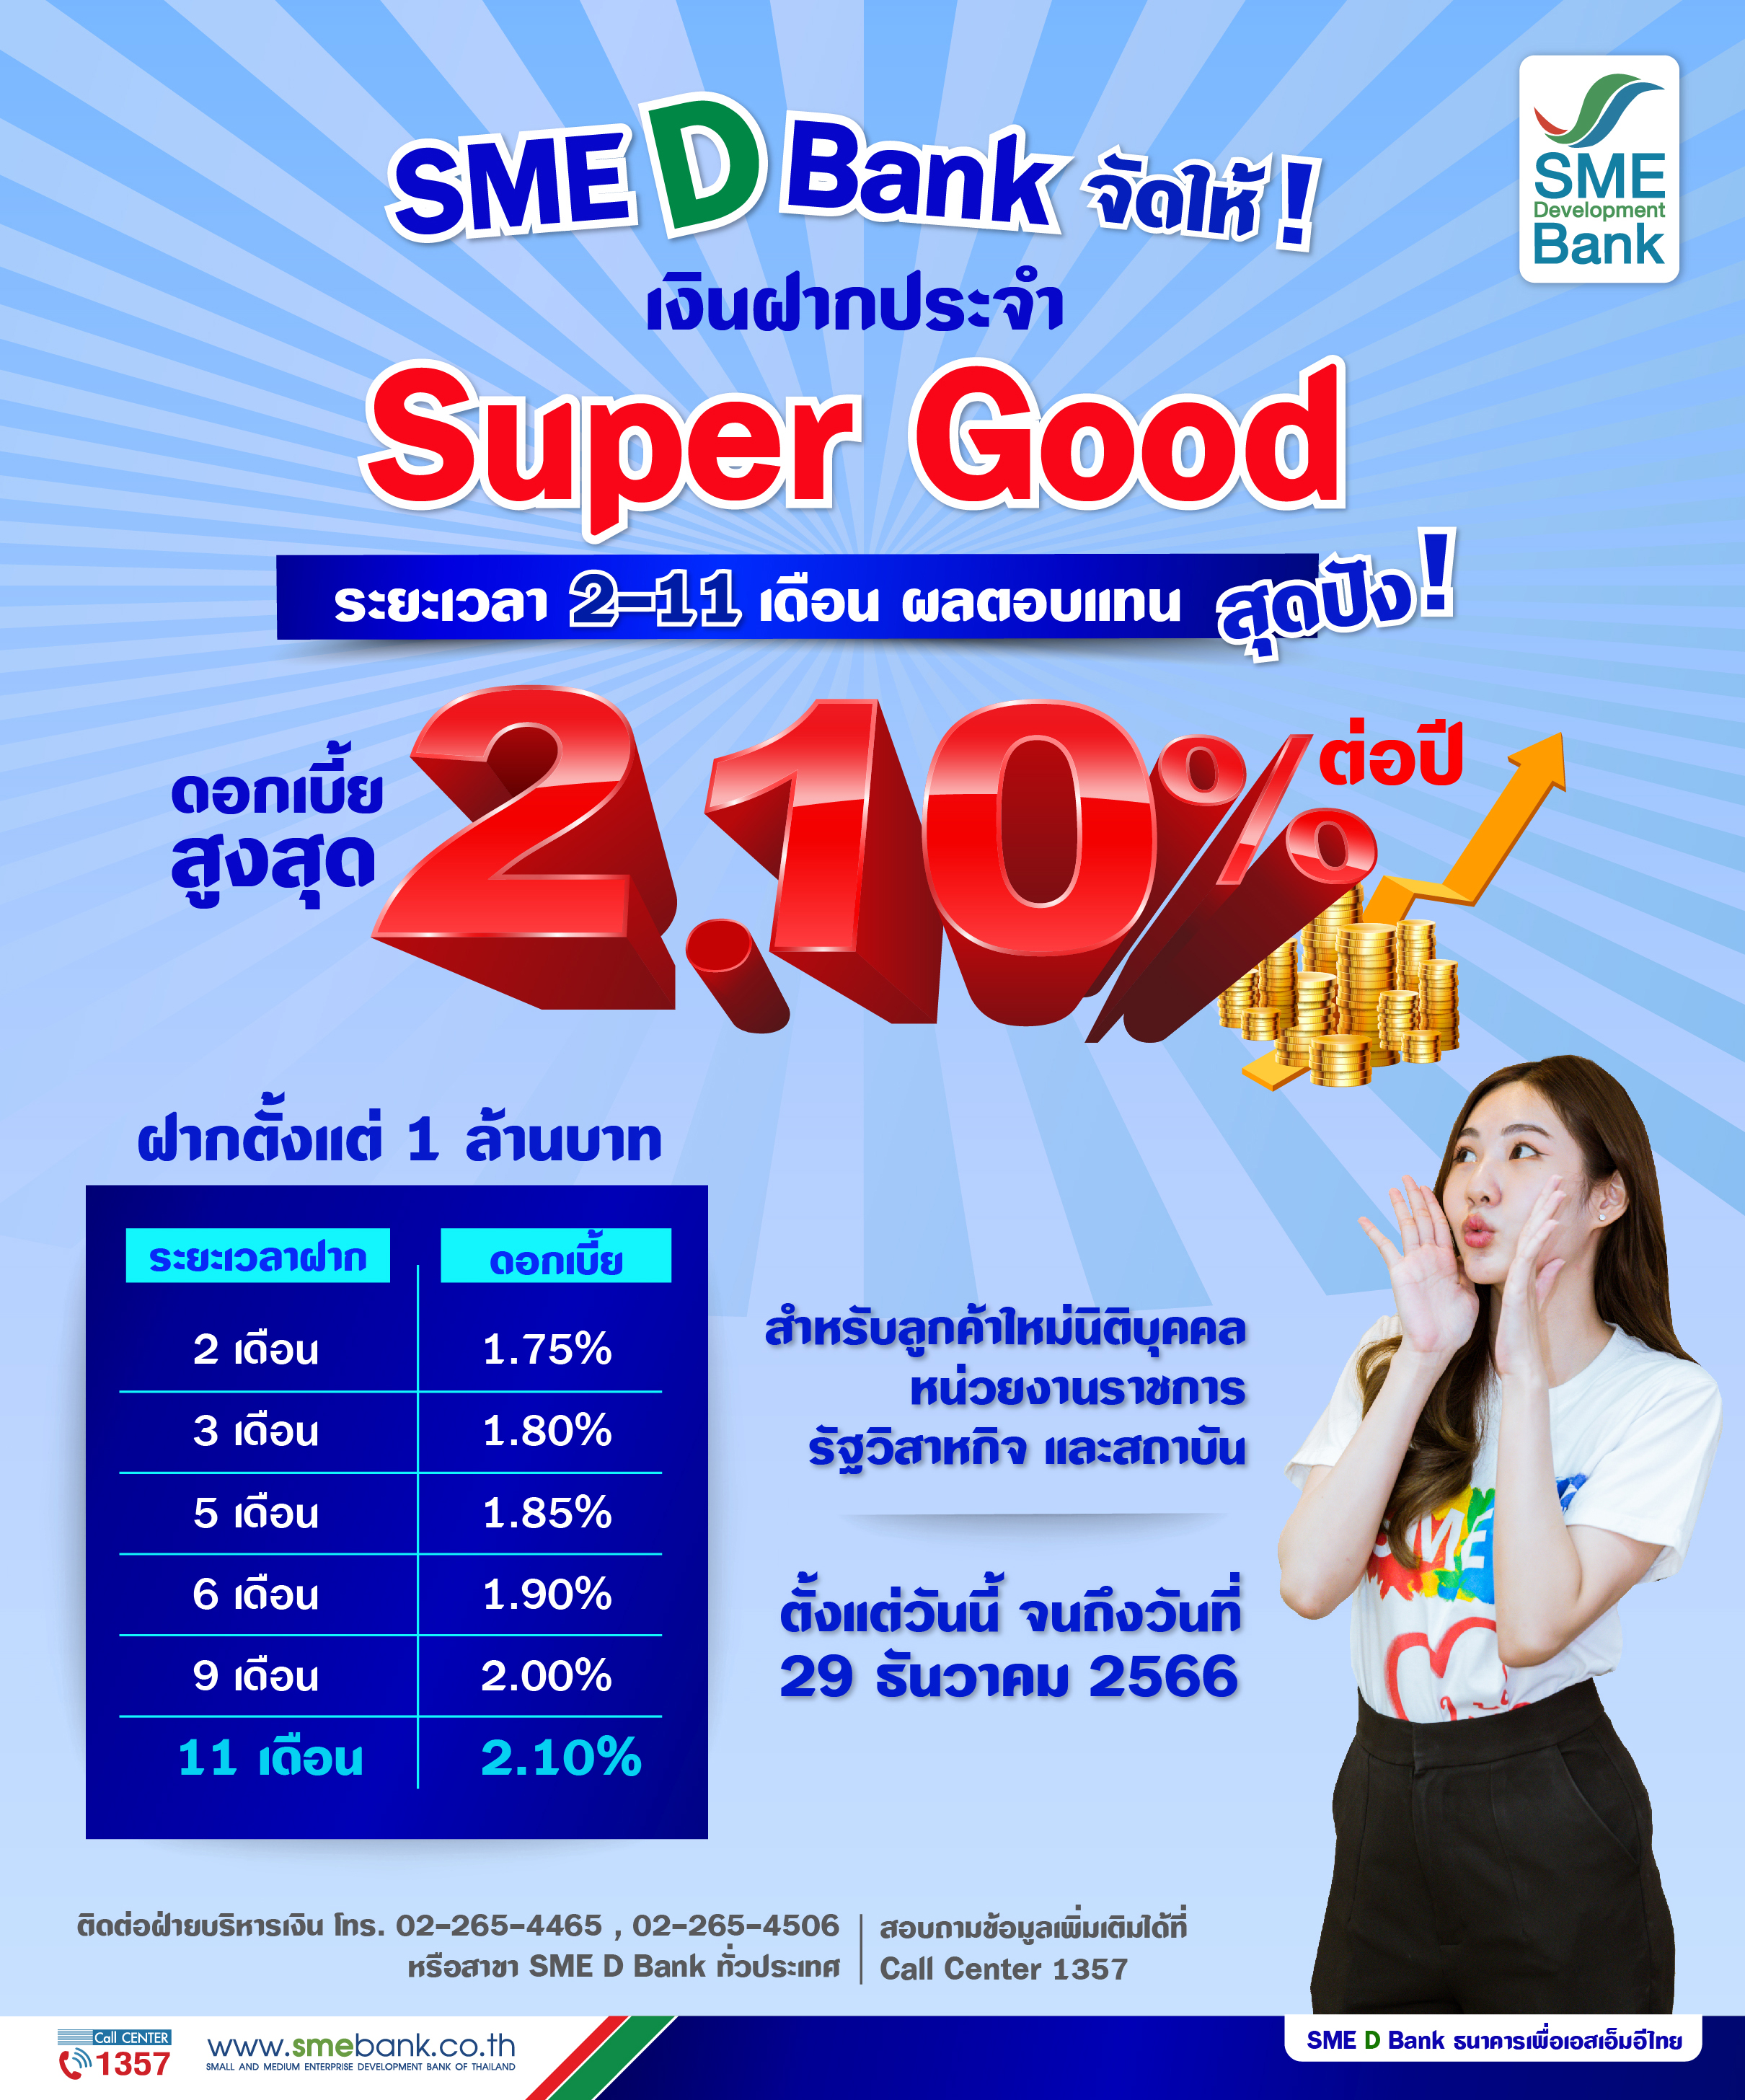 SME D Bank ออกแคมเปญเงินฝากประจำ ‘Super Good’ ฝากระยะสั้นแค่ 2-11 เดือน รับผลตอบแทนสุดปังสูงสุด 2.10% ต่อปี